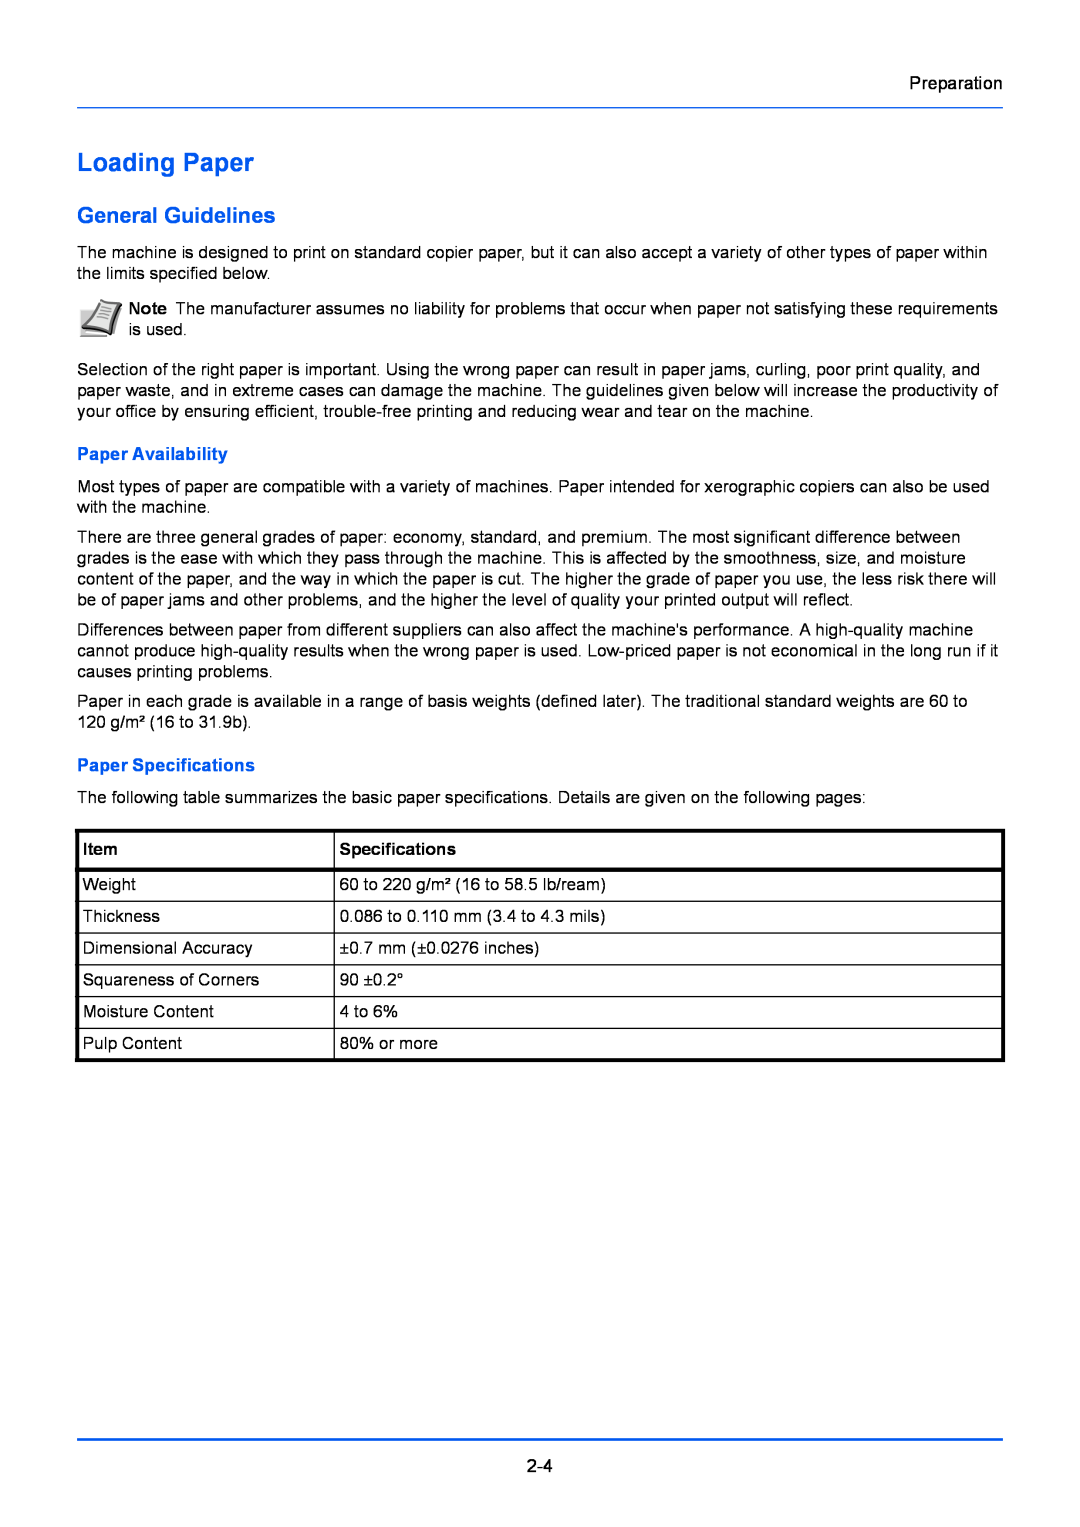 Kyocera FS-1020MFP, FS-1220MFP manual Loading Paper, General Guidelines 